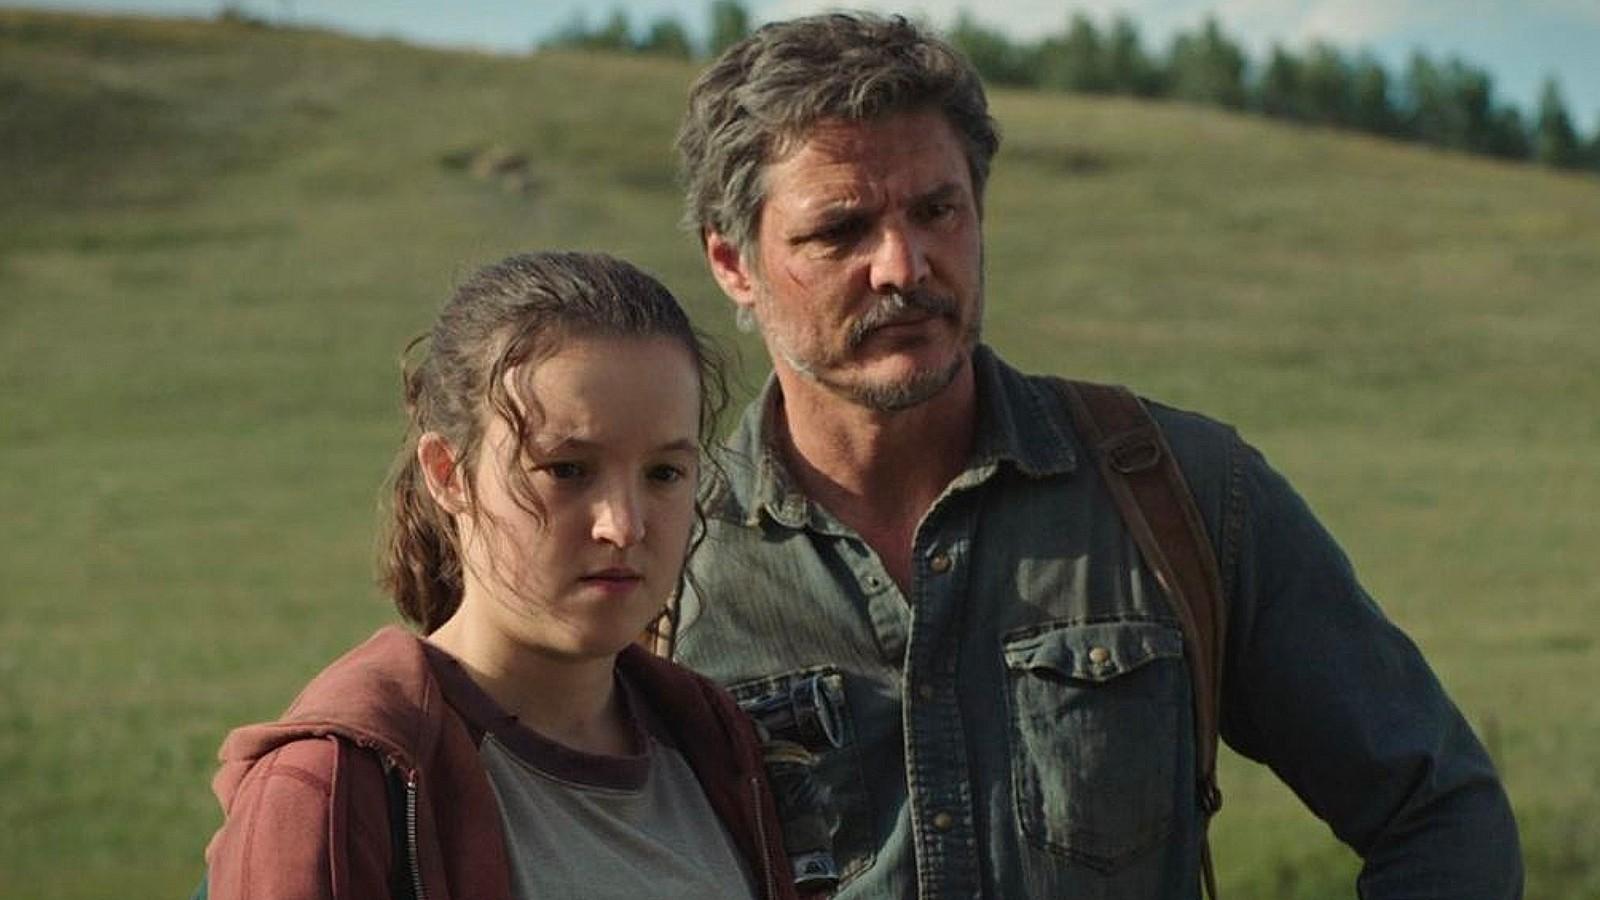 Joel and Ellie in HBO's The Last of Us